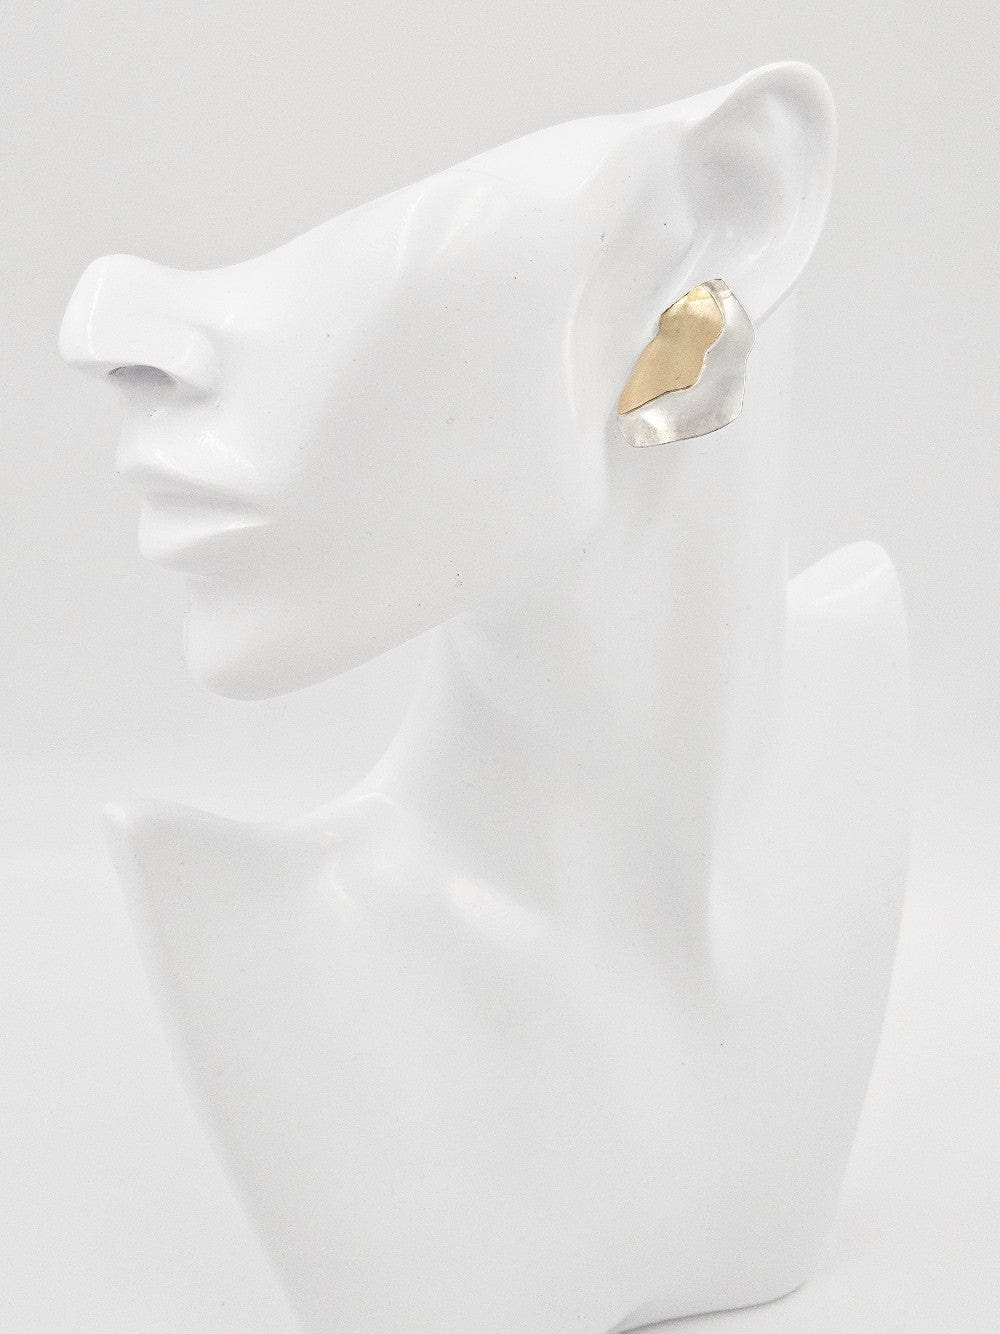 Artisan Earrings Jewelry Vintage Studio Artist Sterling + 14k Abstract Modernist Earrings